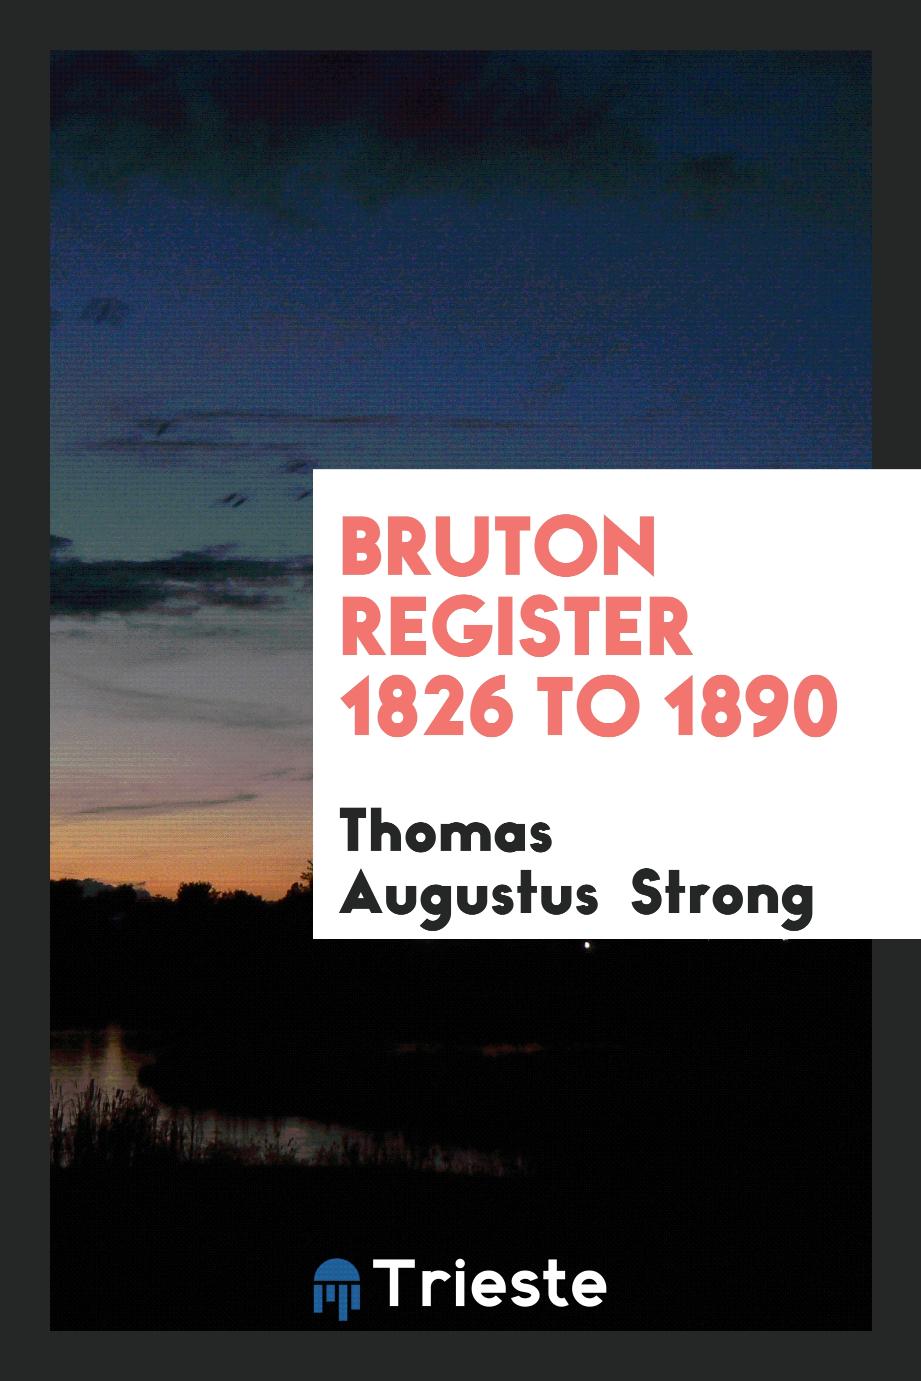 Bruton Register 1826 to 1890